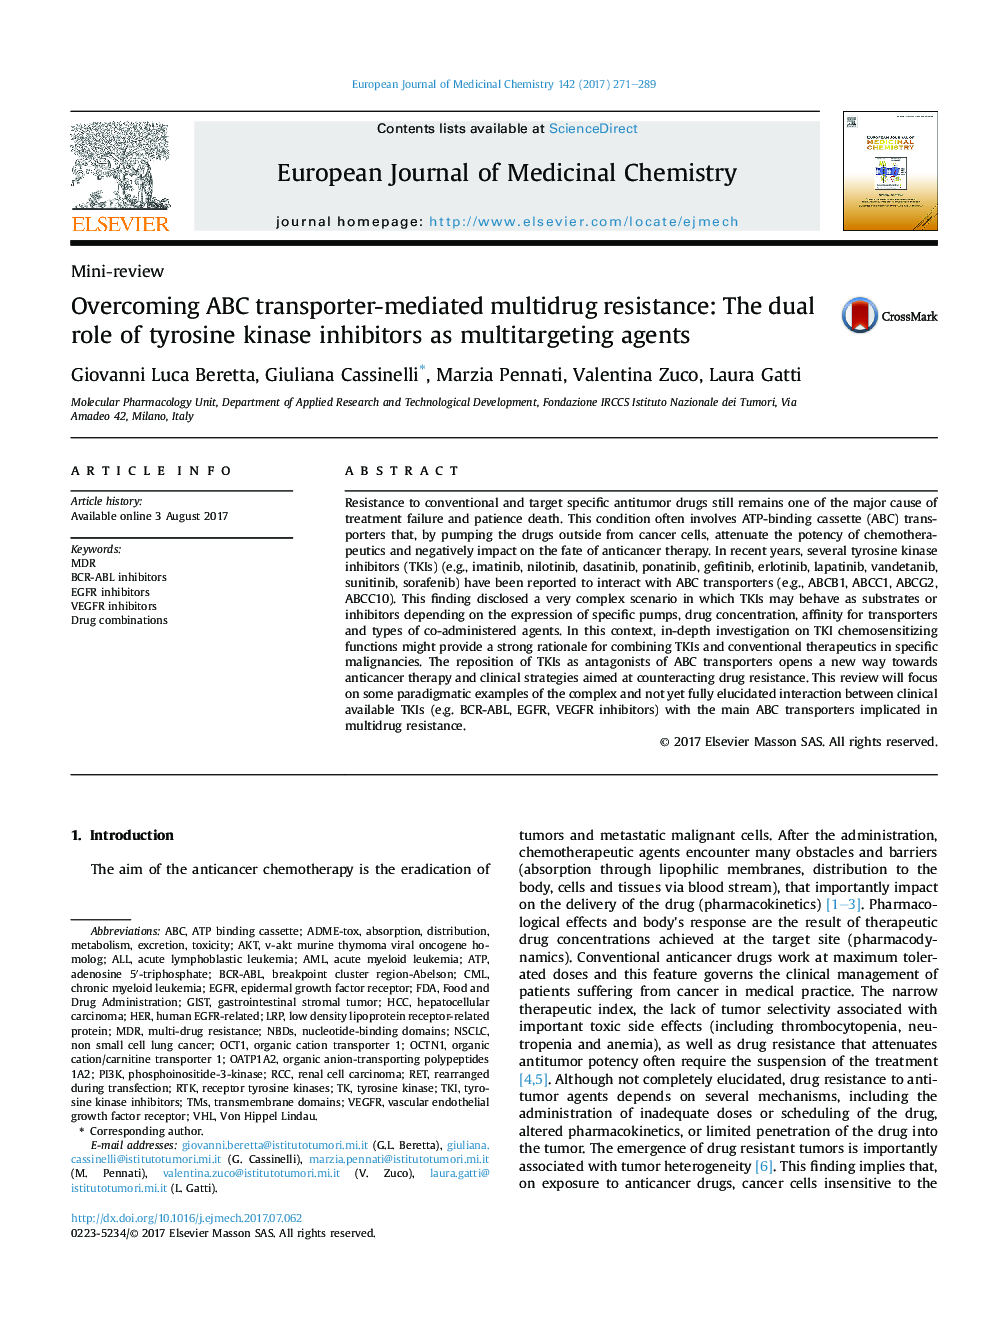 Overcoming ABC transporter-mediated multidrug resistance: The dual role of tyrosine kinase inhibitors as multitargeting agents